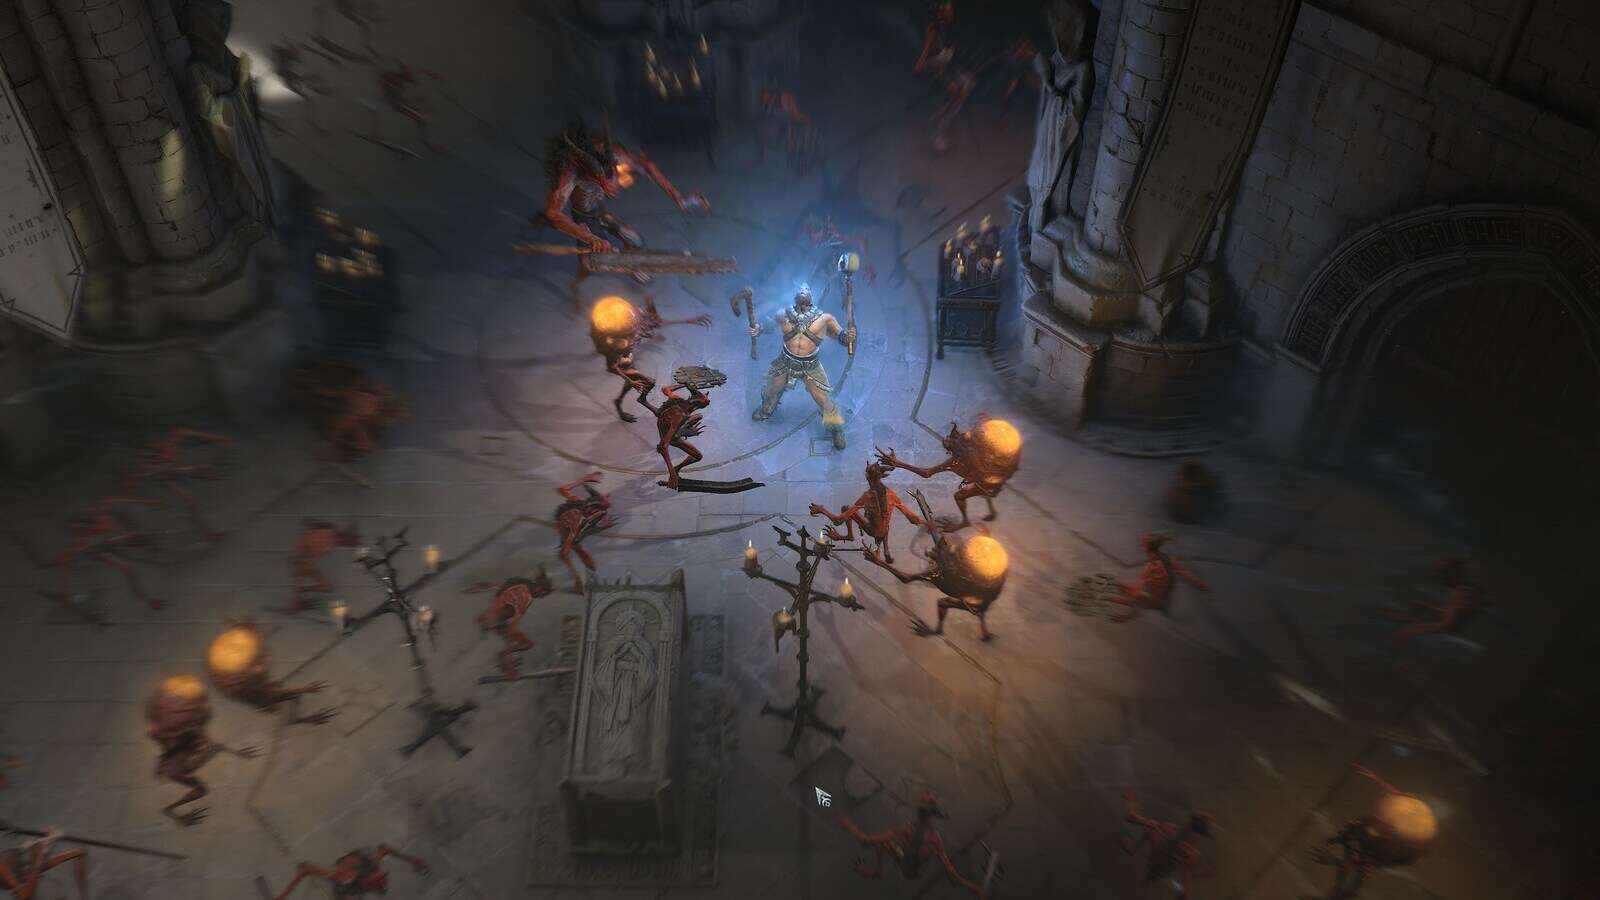 A Barbarian fights enemies in Diablo 4 (Vessel of Hatred story)